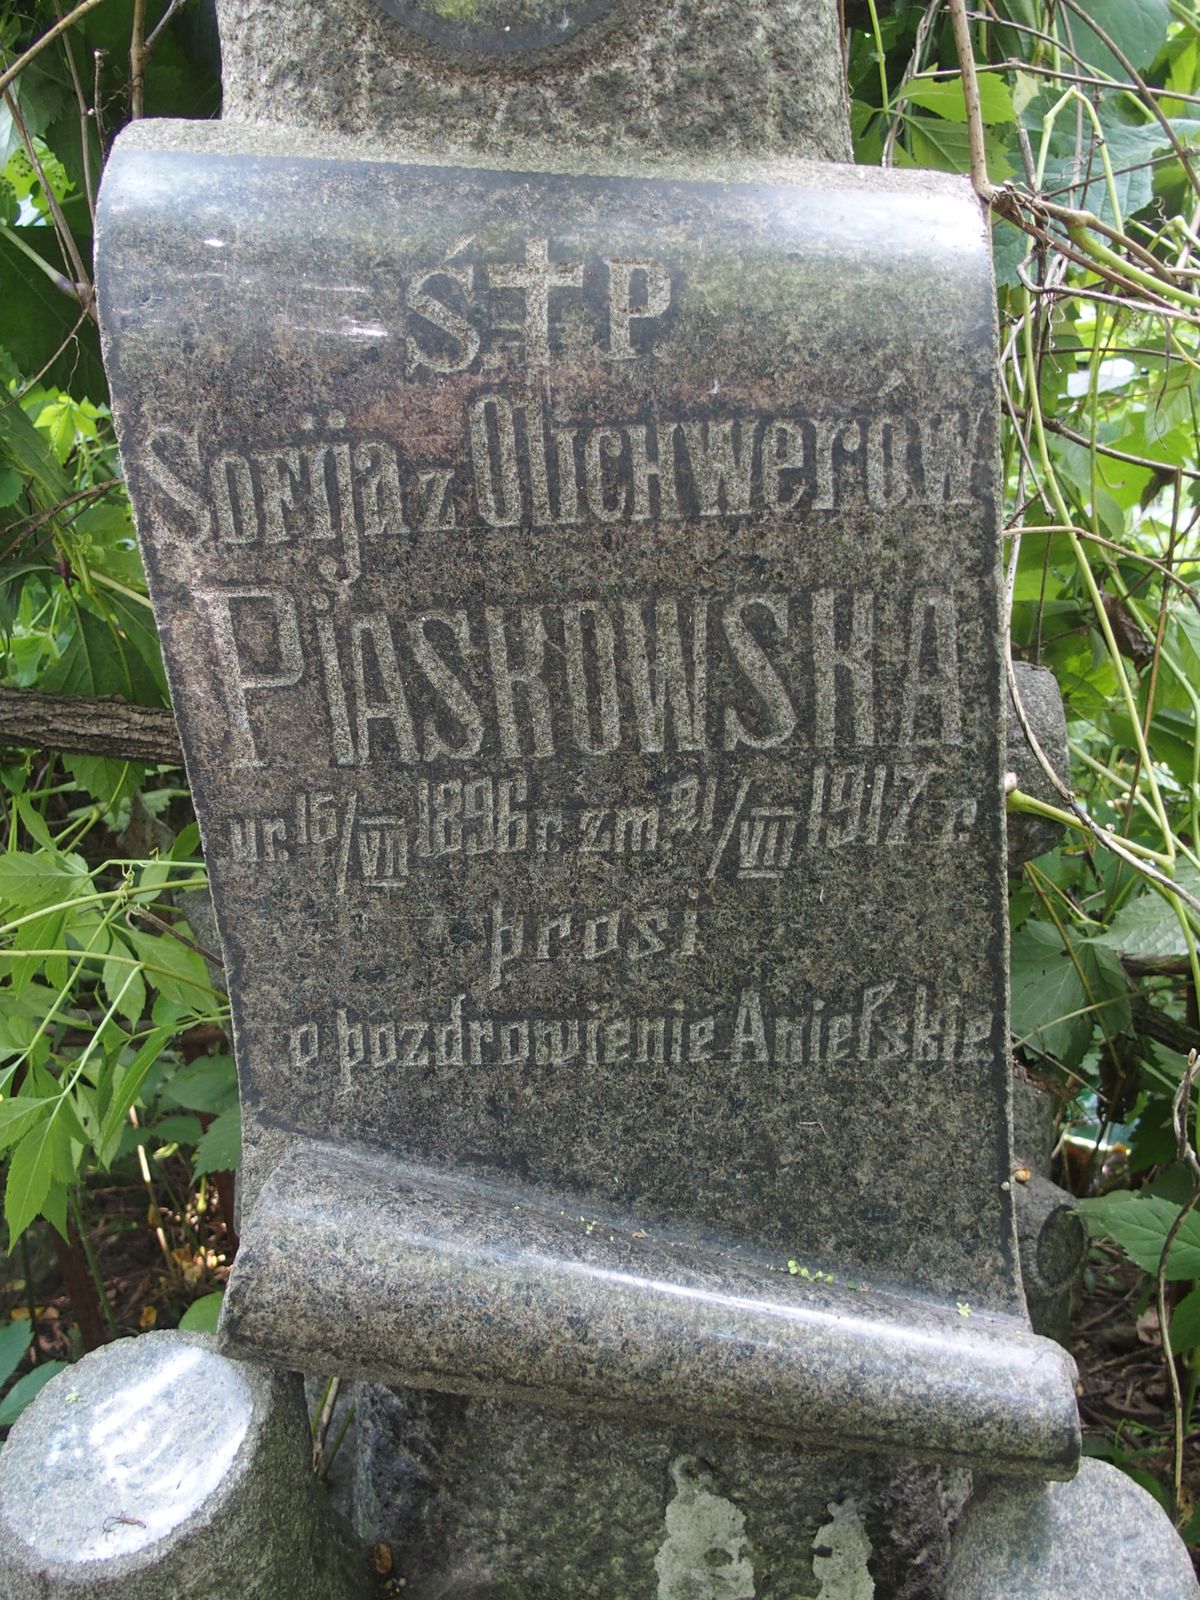 Inscription from the gravestone of Zofia Piaskowska